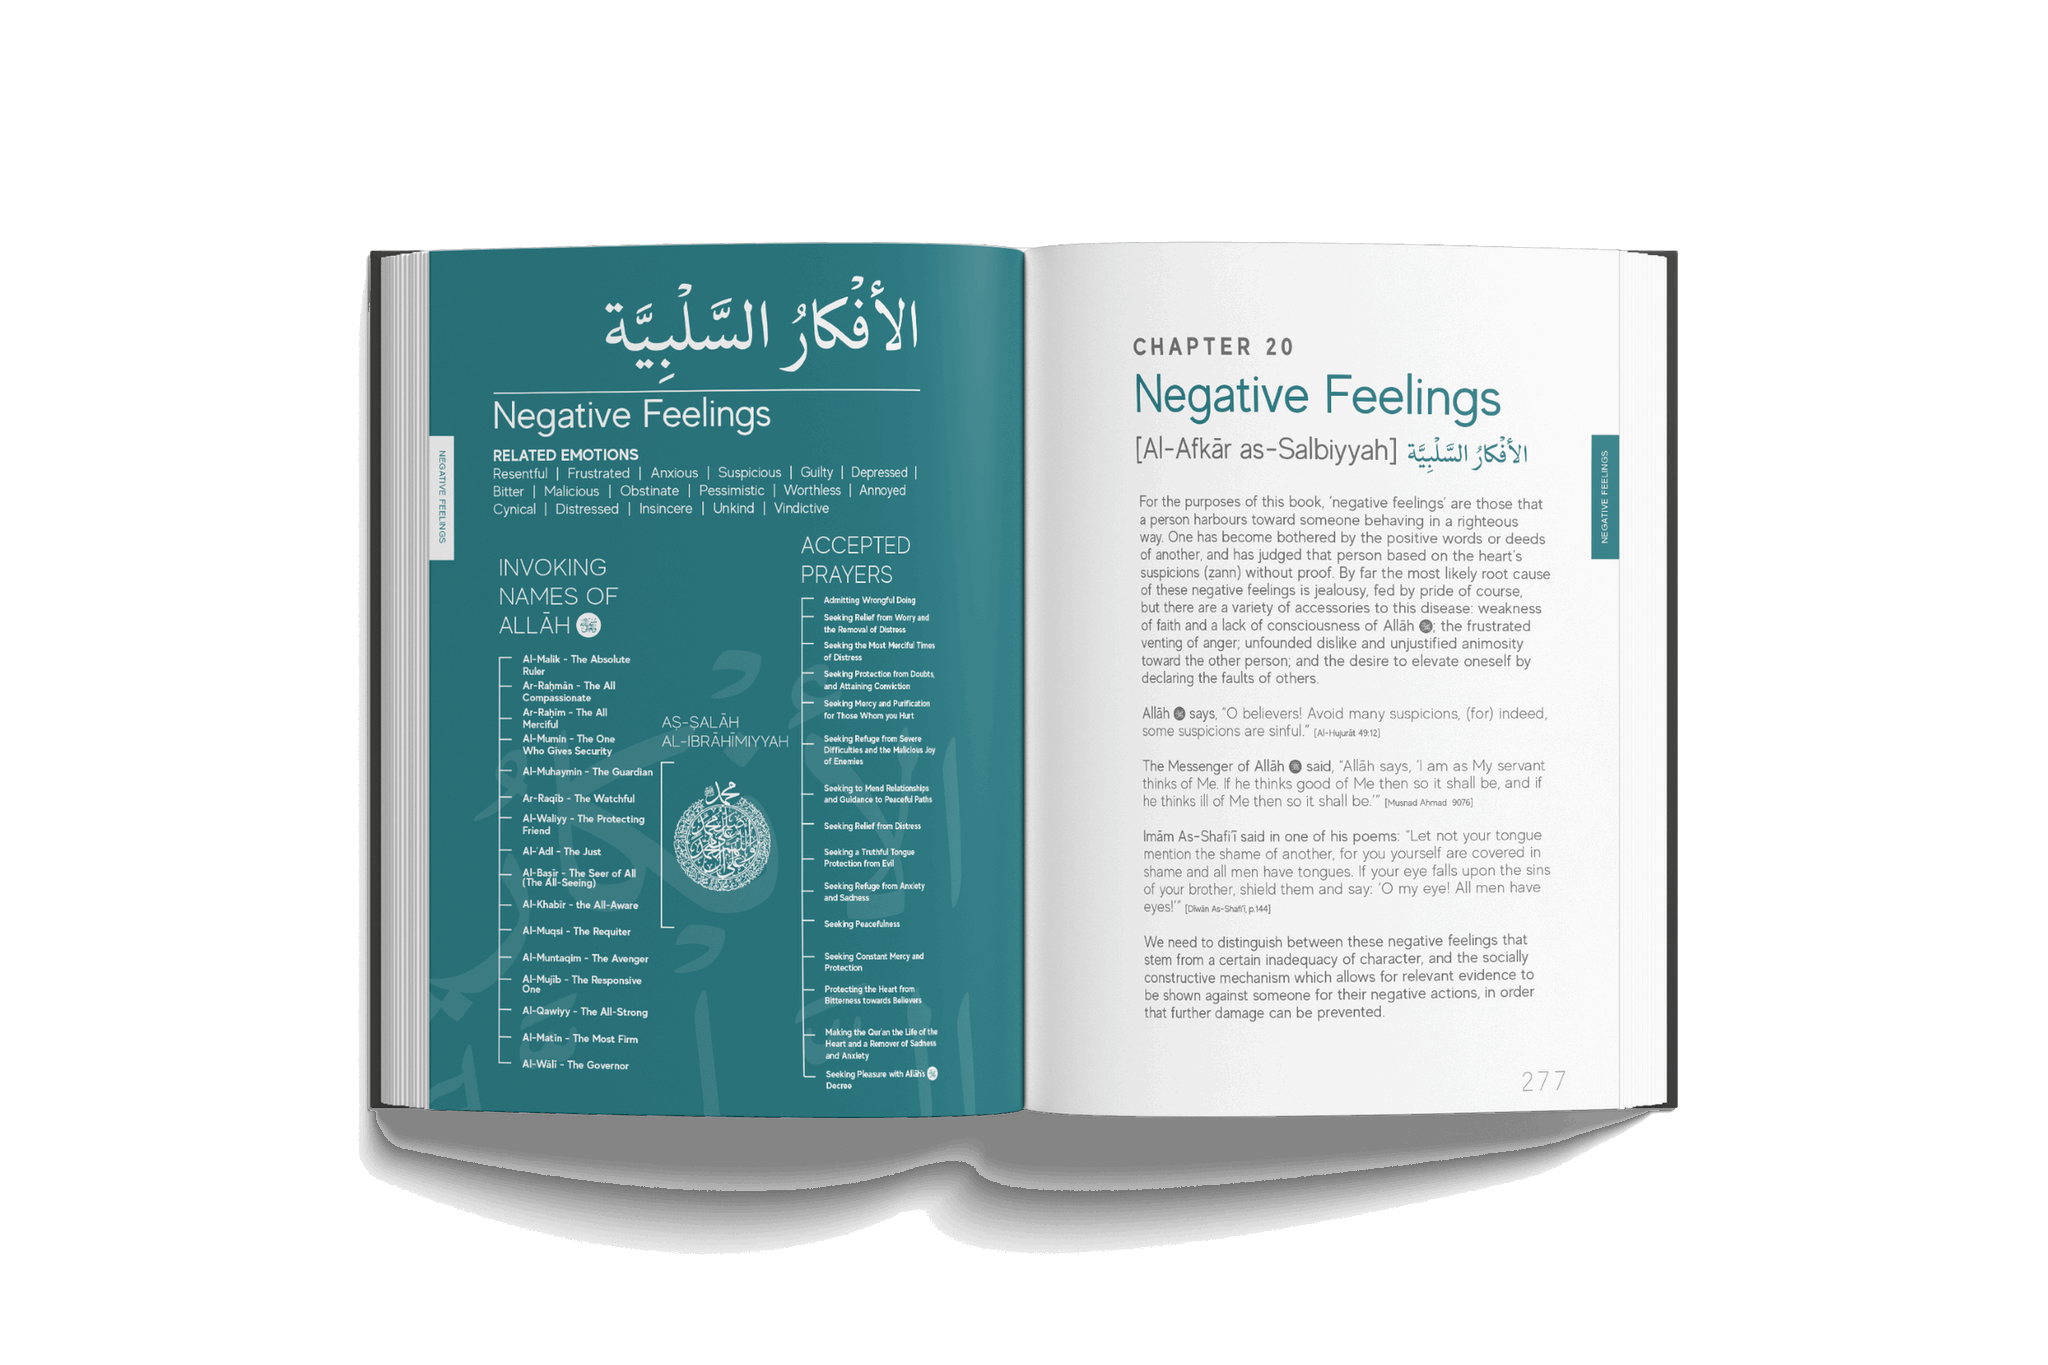 A Handbook of Accepted Prayers - Premium Hardcover - Islamic Book - Fajr Noor